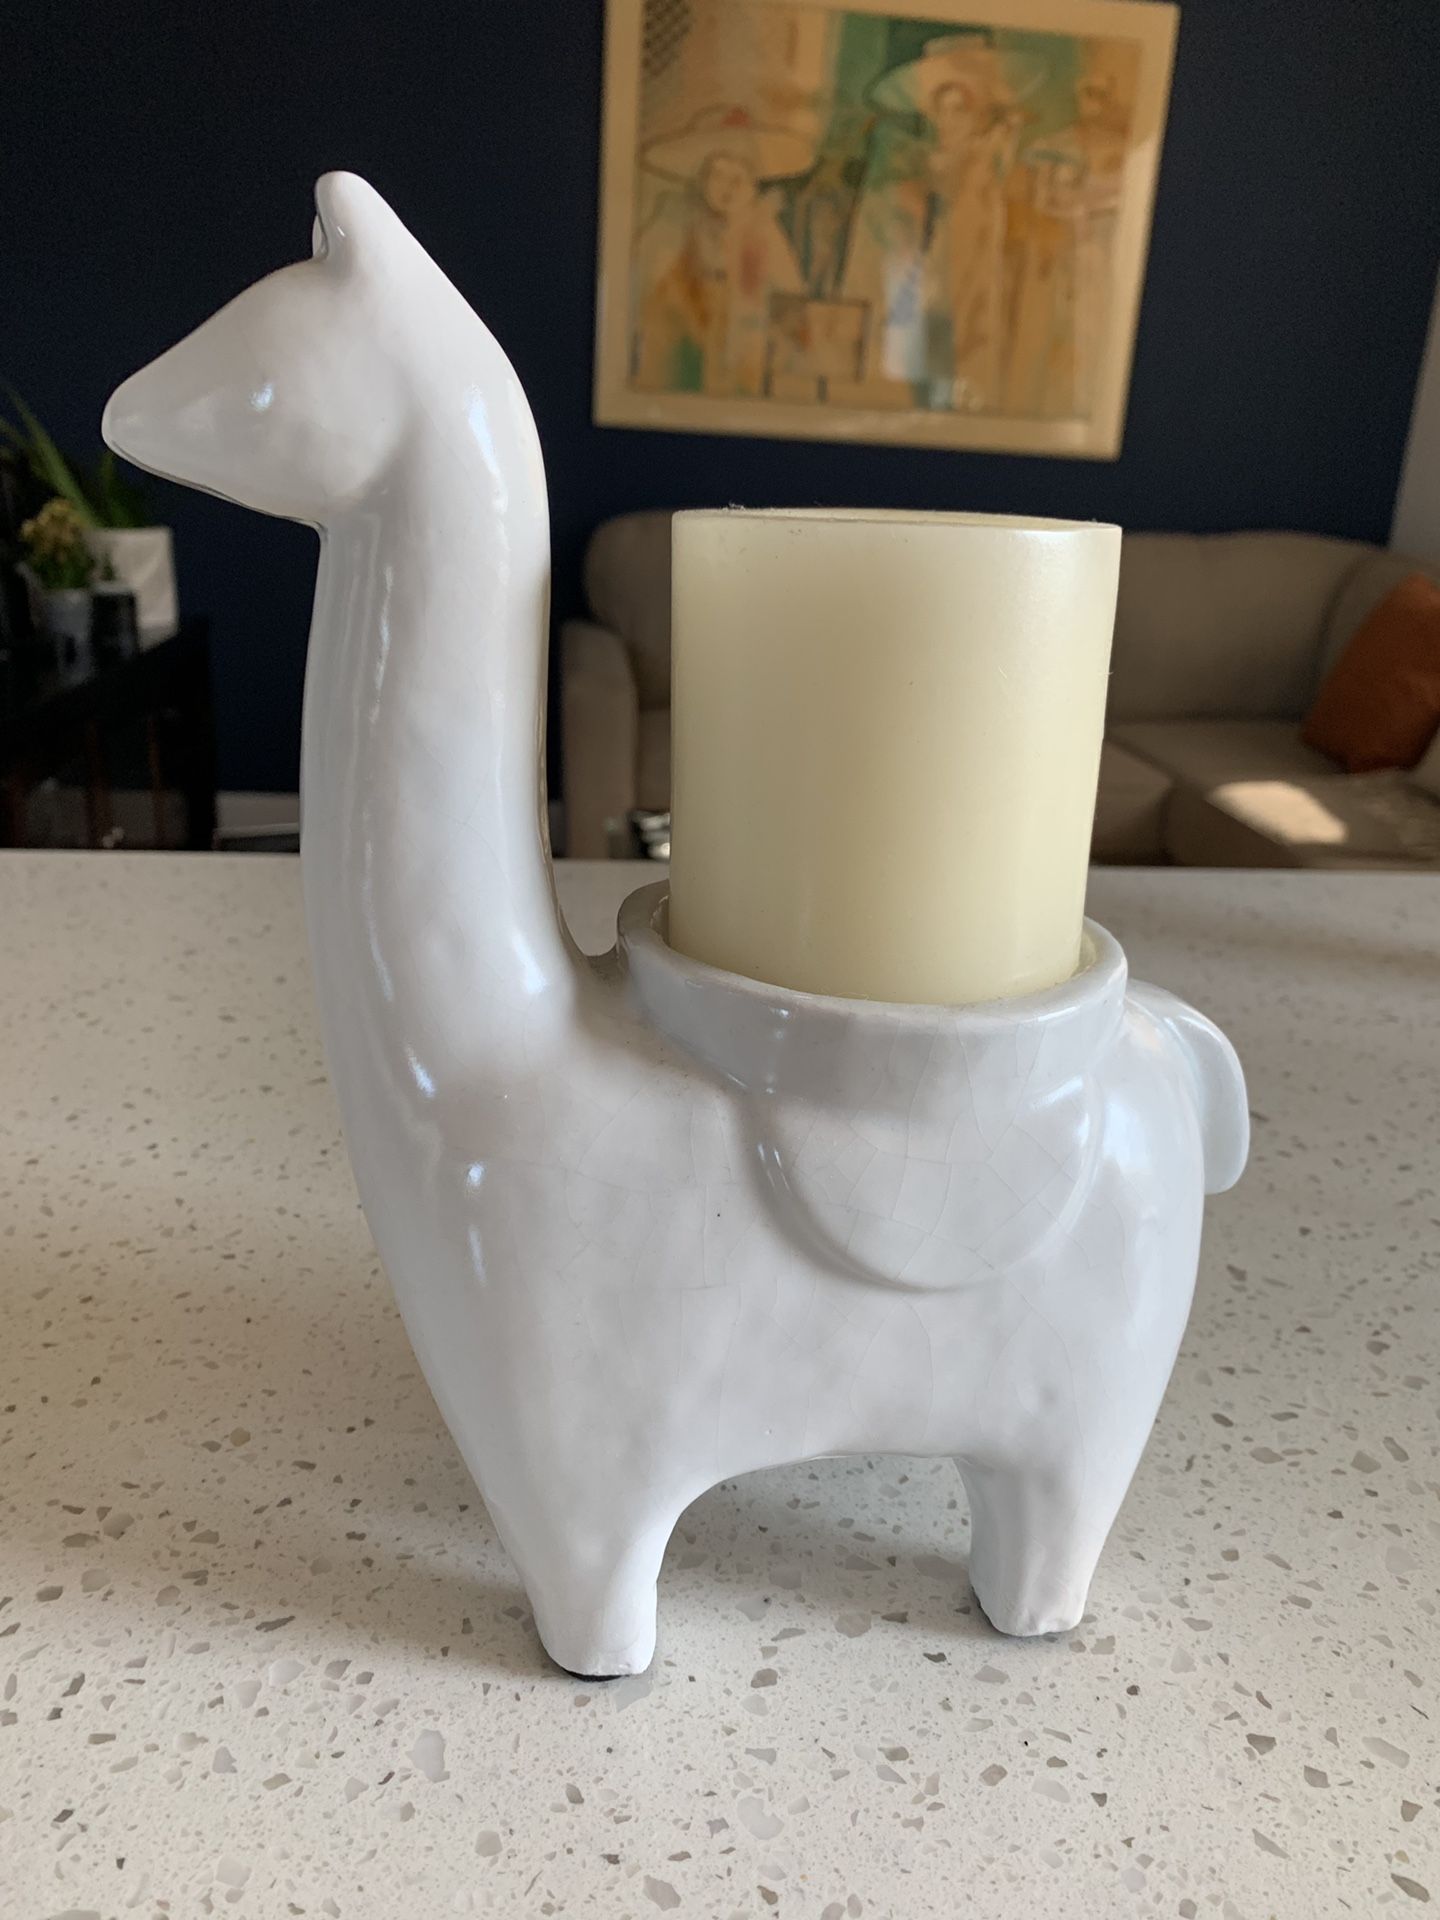 West Elm Llama/alpaca candle holder